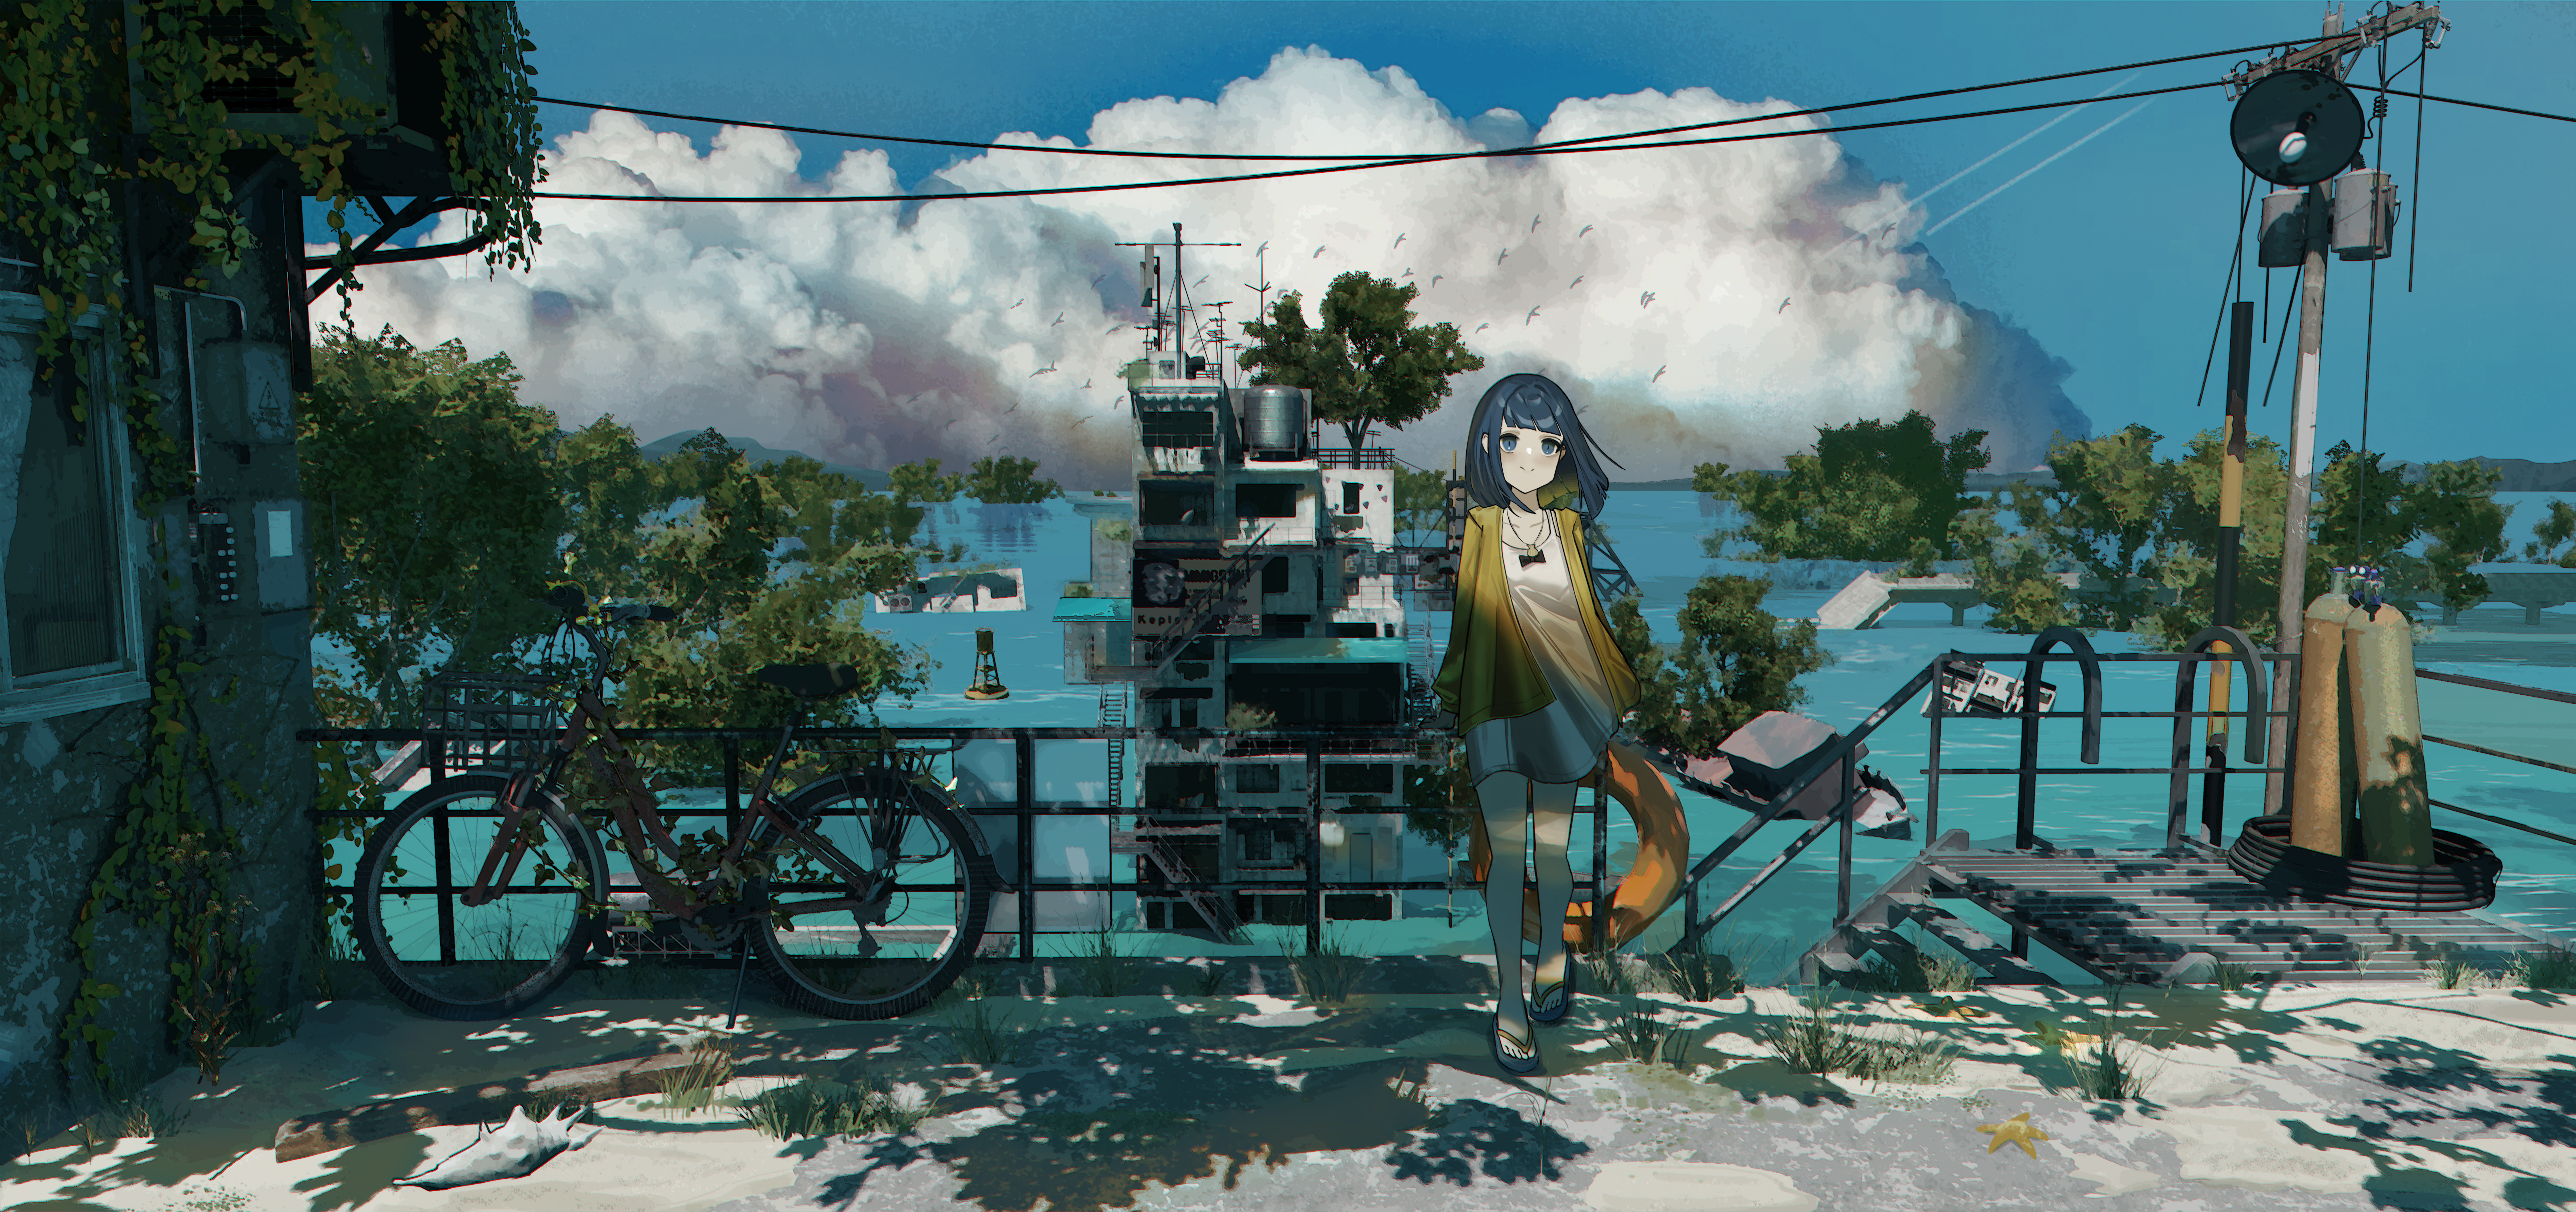 Digital Digital Art Digital Painting Artwork Illustration Anime Girls Clouds Environment Landscape S 8951x4212